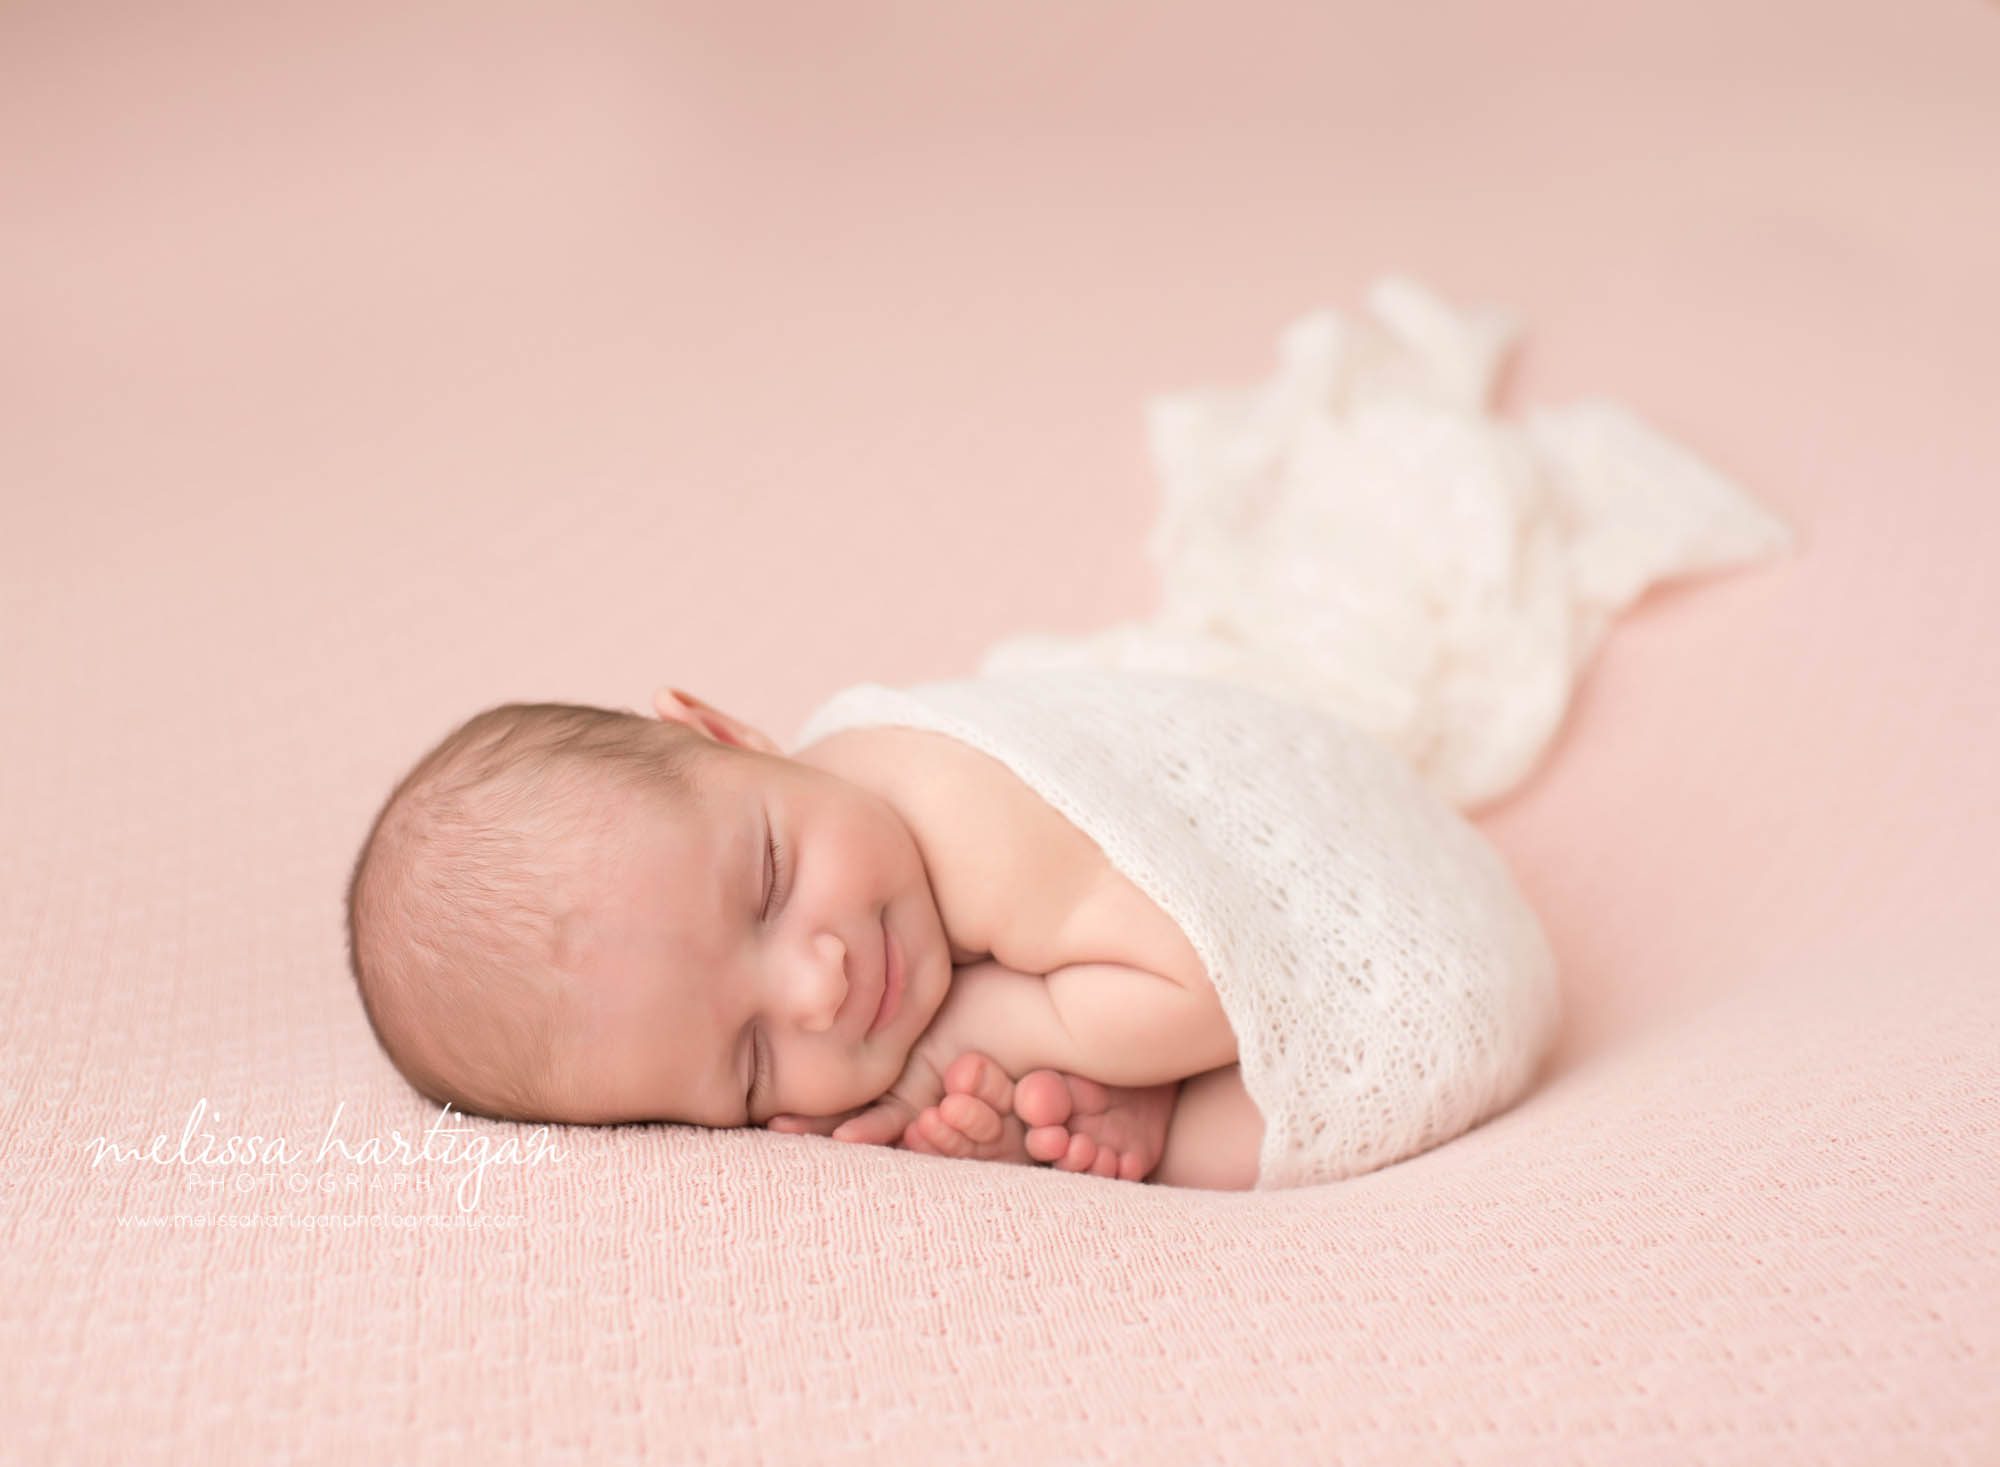 Connecticut Newborn Photographer - baby sleeping on pink blanket